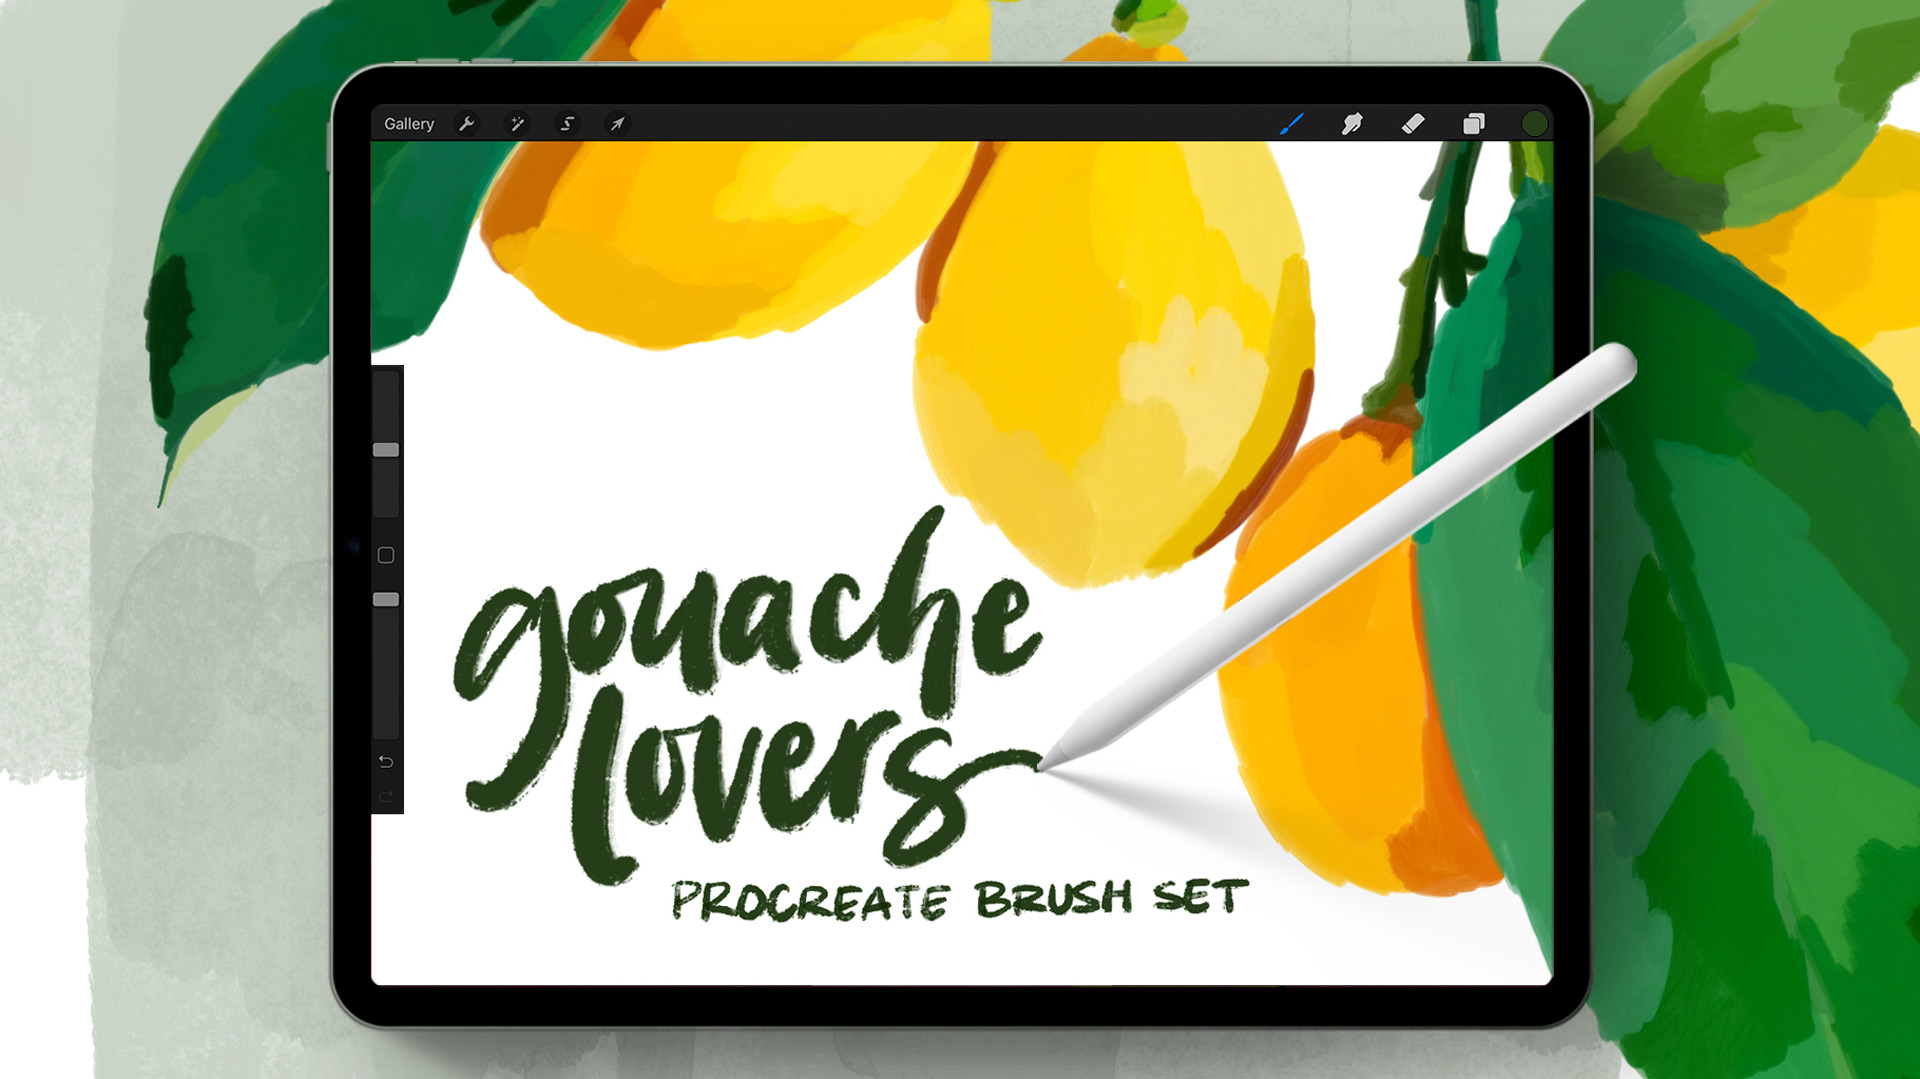 gouache lovers brush set preview